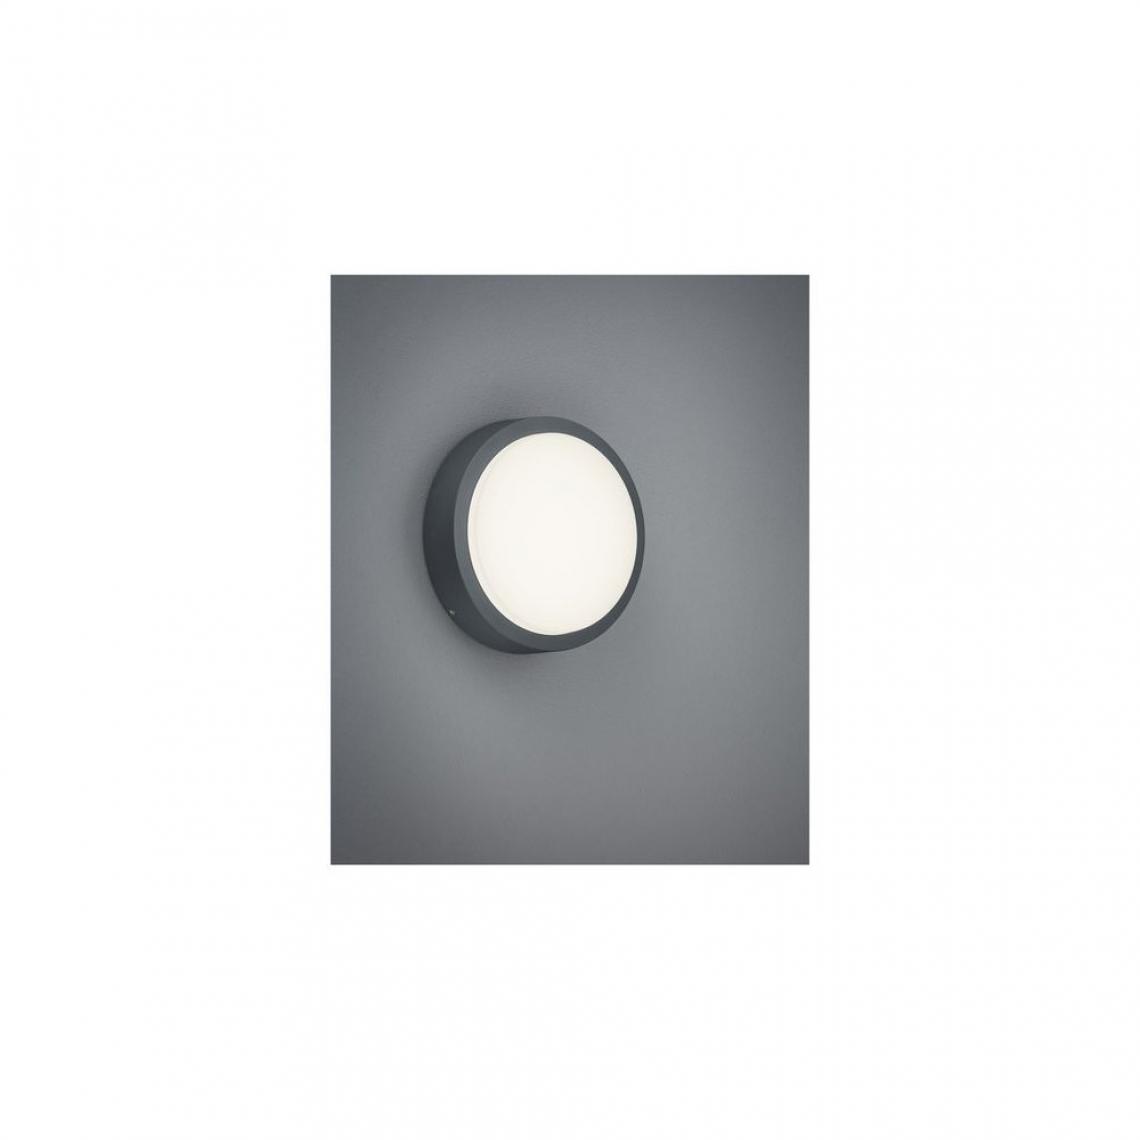 Boutica-Design - Applique Breg Anthracite 1x9W SMD LED - Applique, hublot